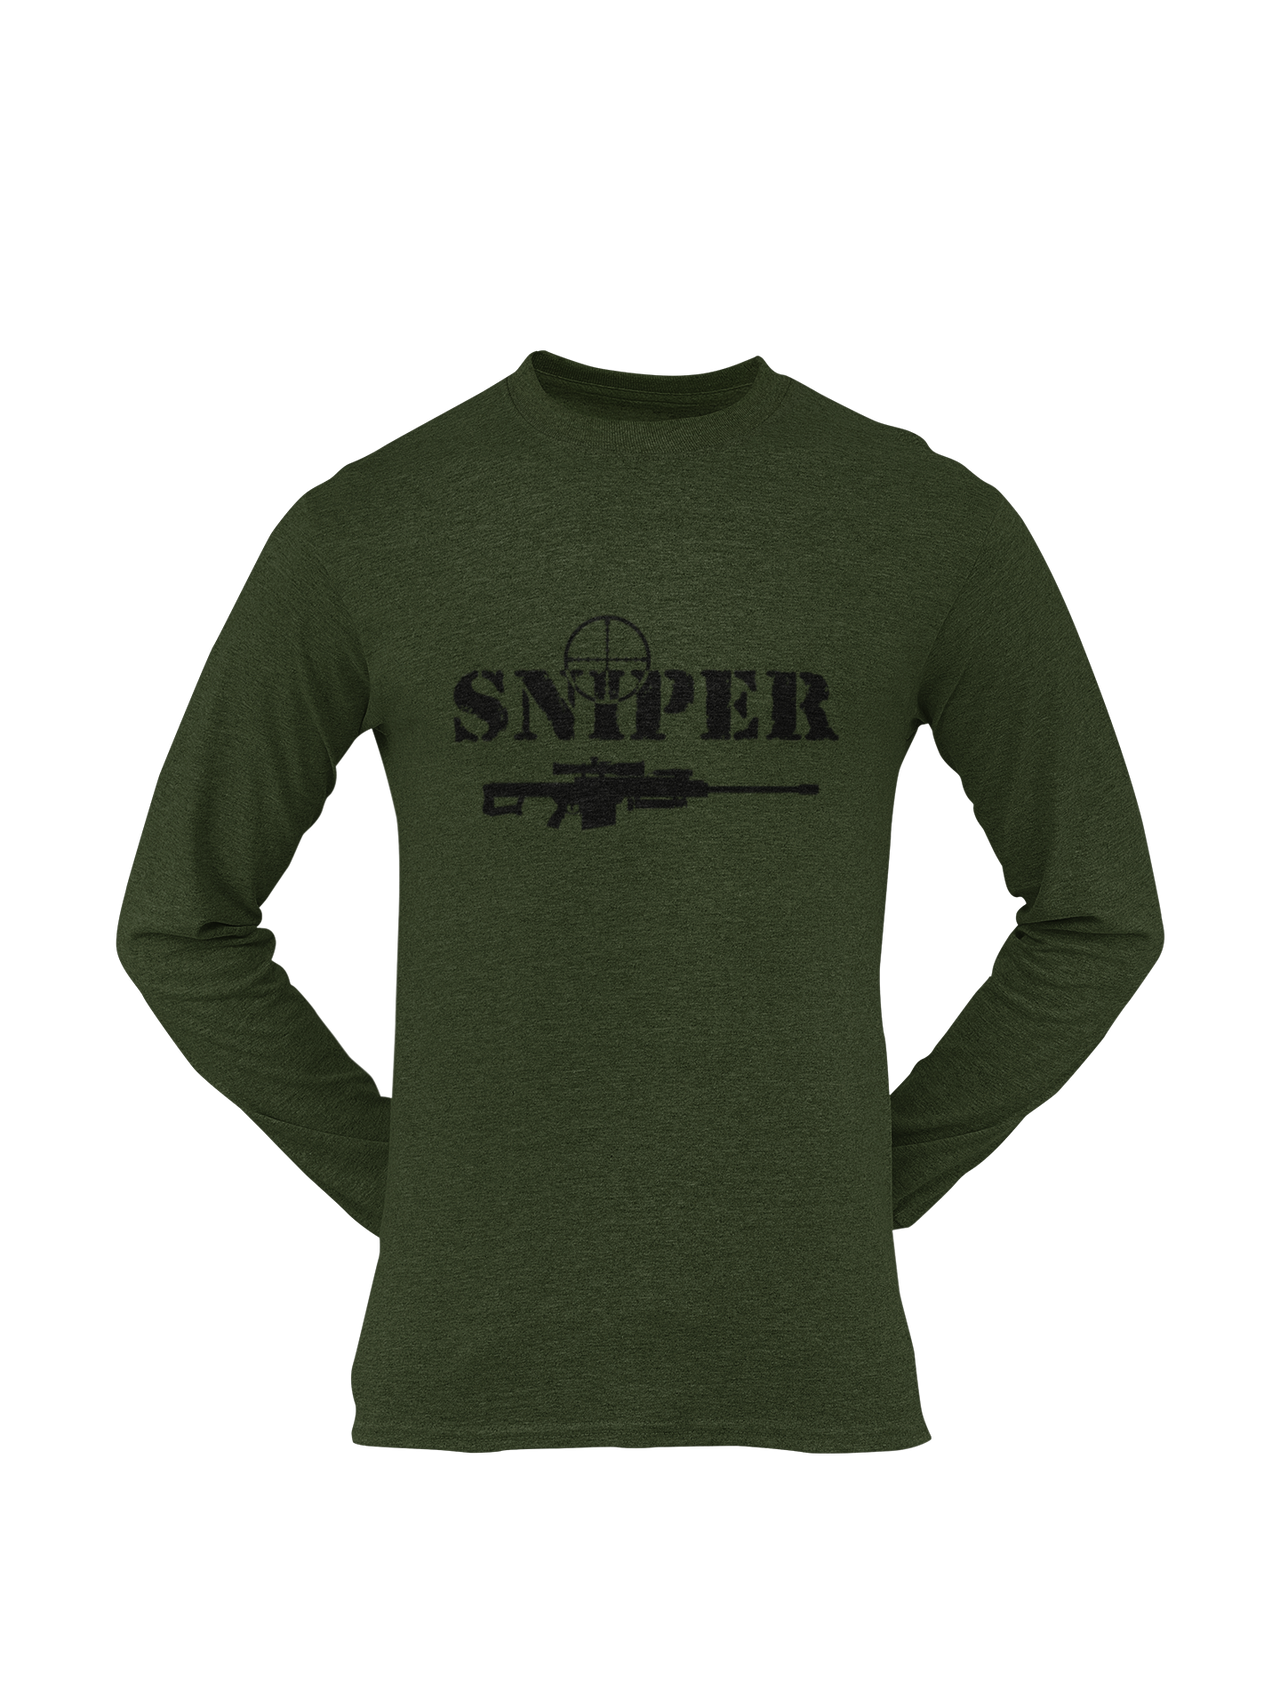 Sniper T-shirt - Sniper, Barrett M82 (Men)